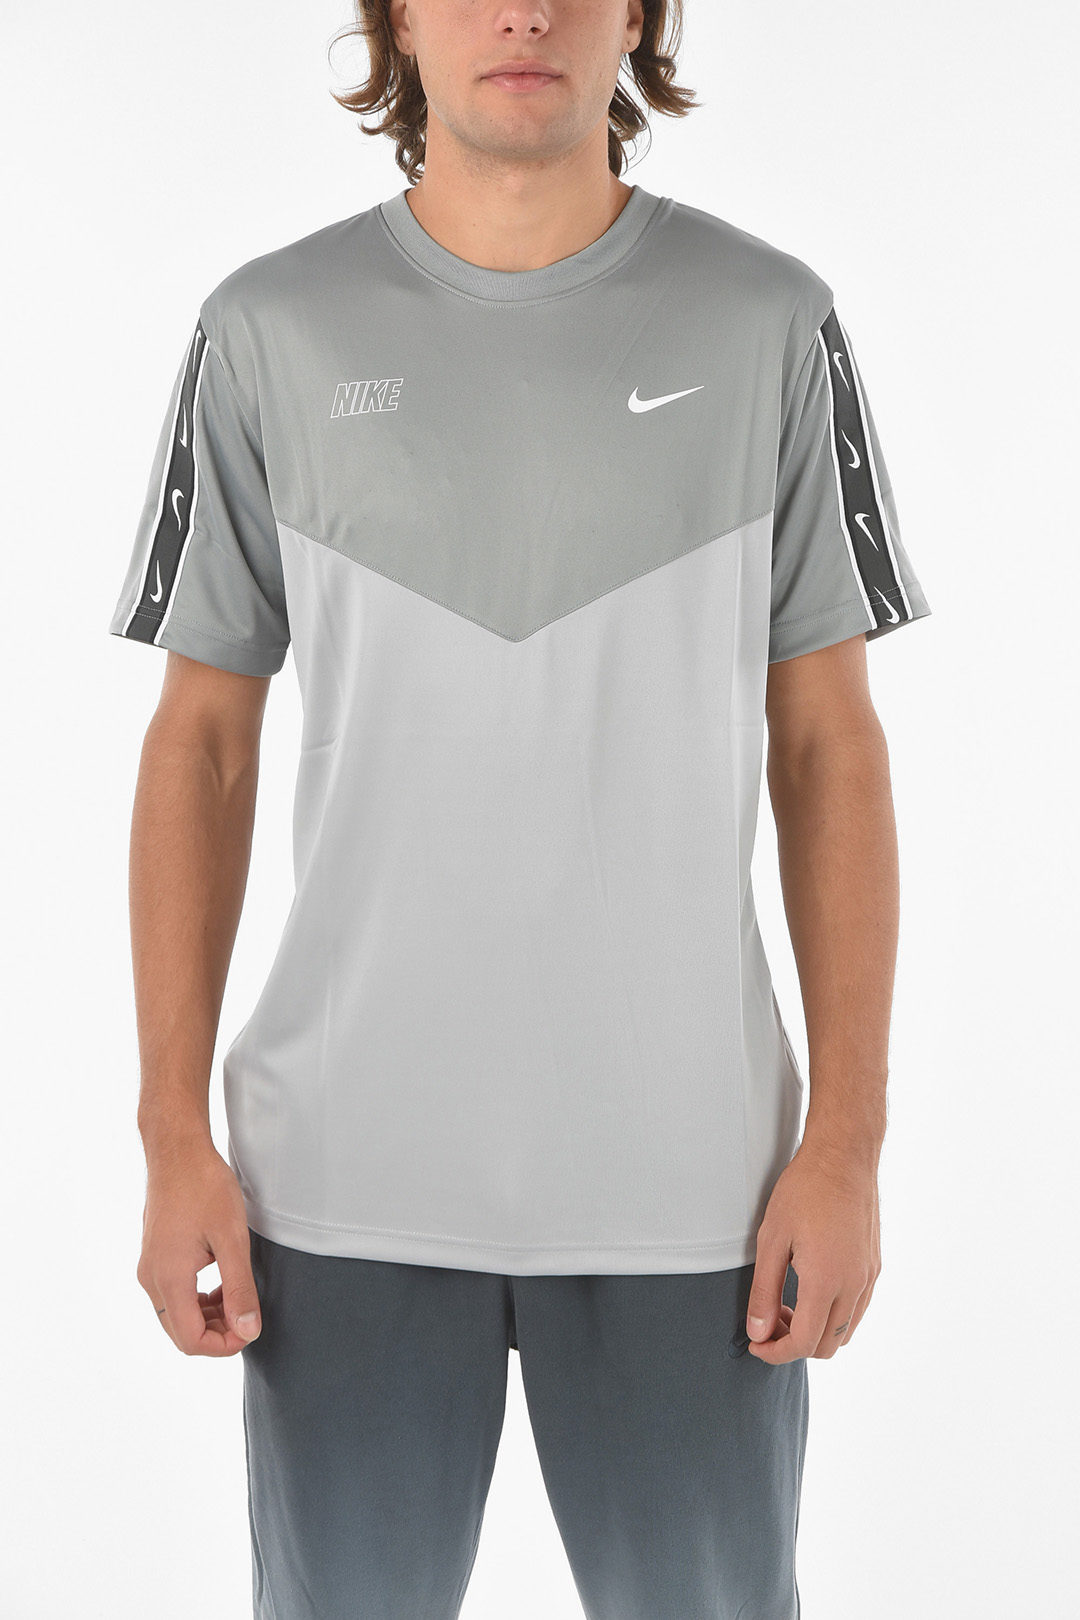 kokain Rejse stå Nike Two-Tone T-shirt with Logo-Print men - Glamood Outlet